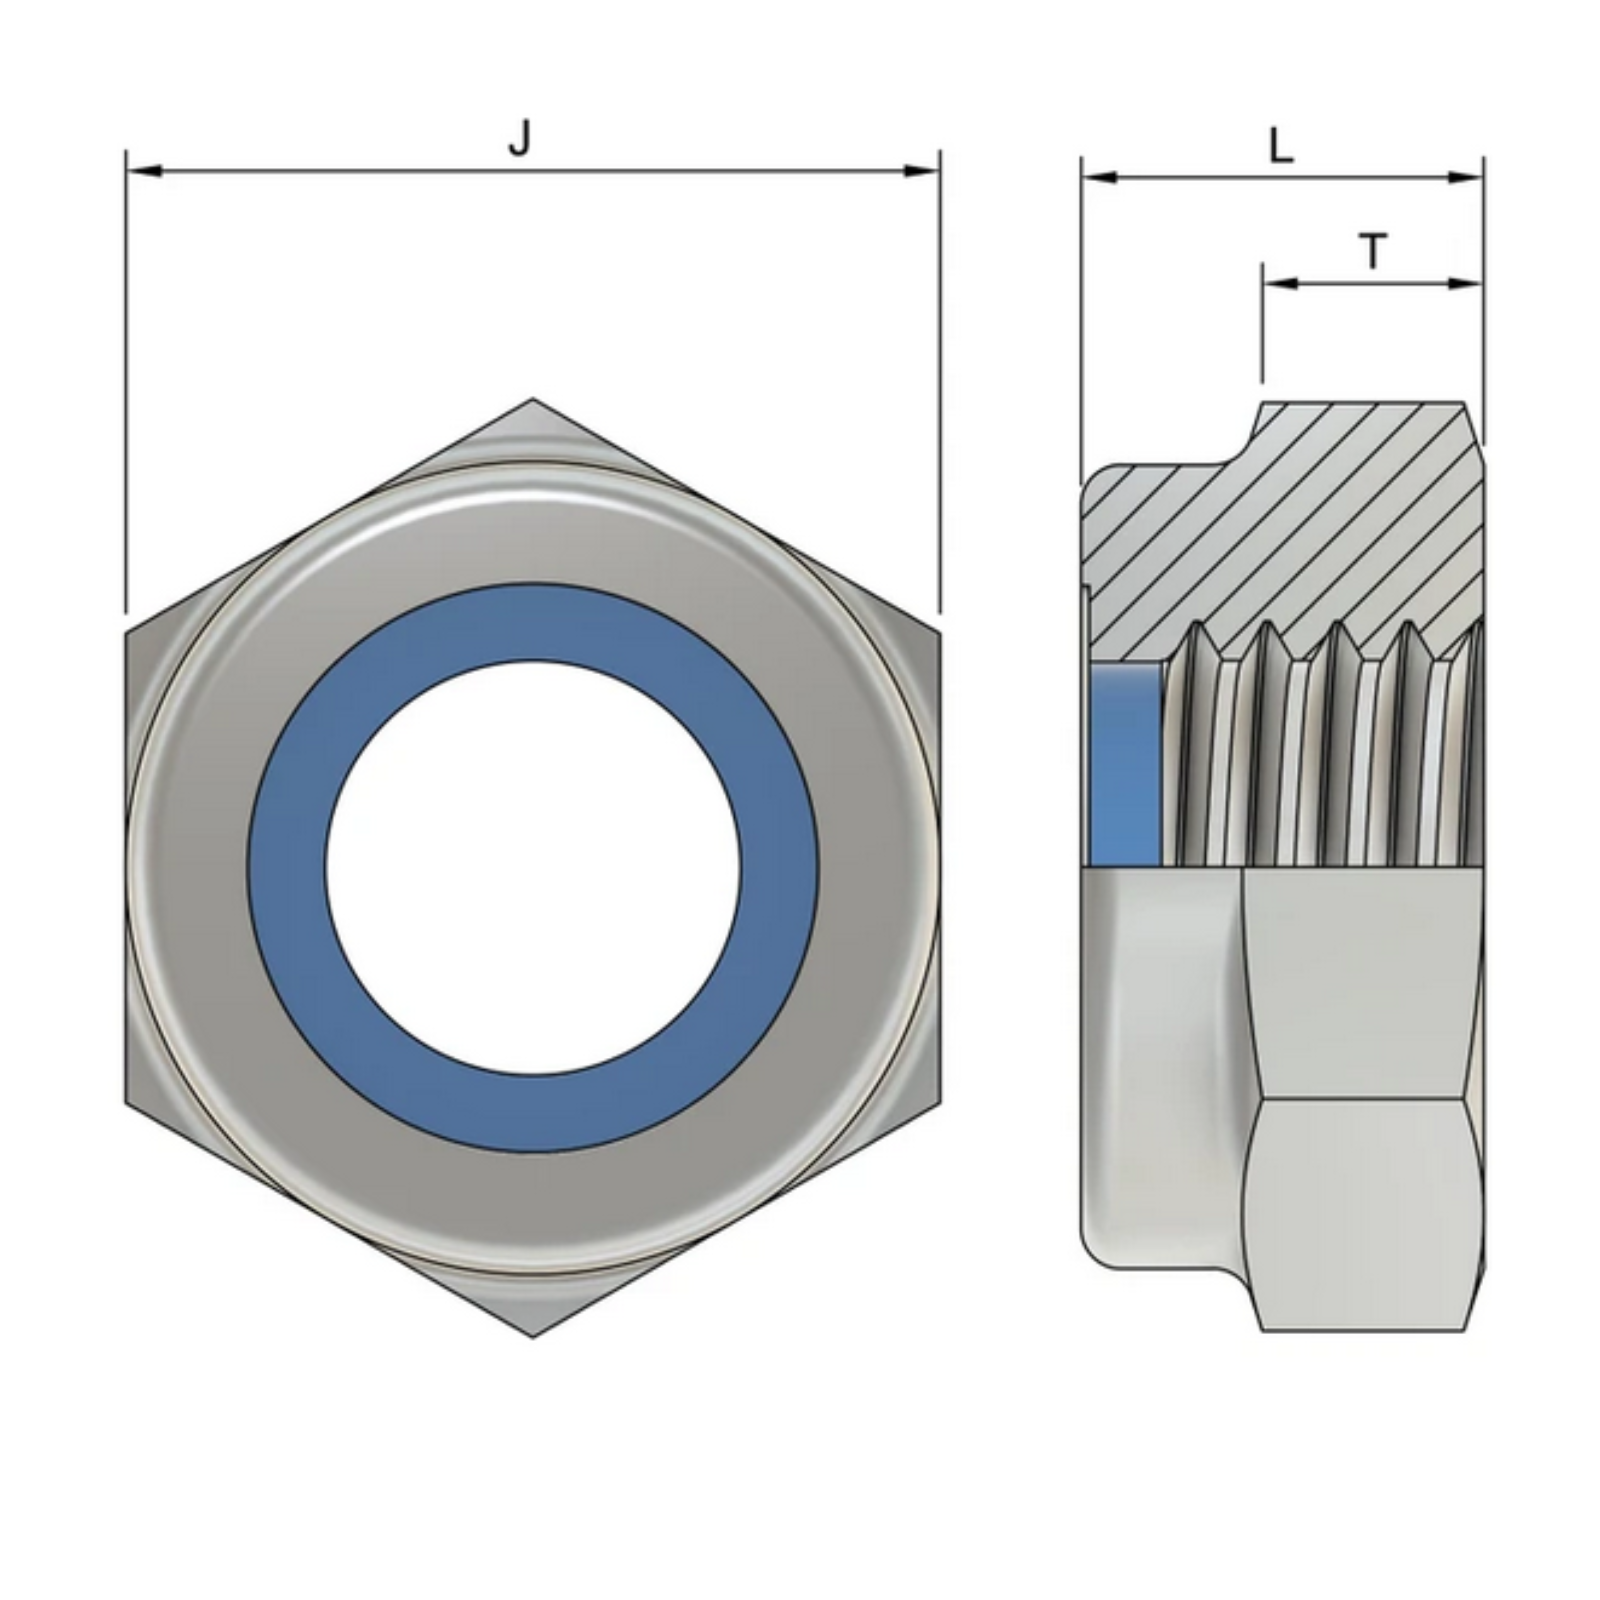 M4 Hexagon Nylon Locking Nuts (DIN 985) - Zinc Plated Steel